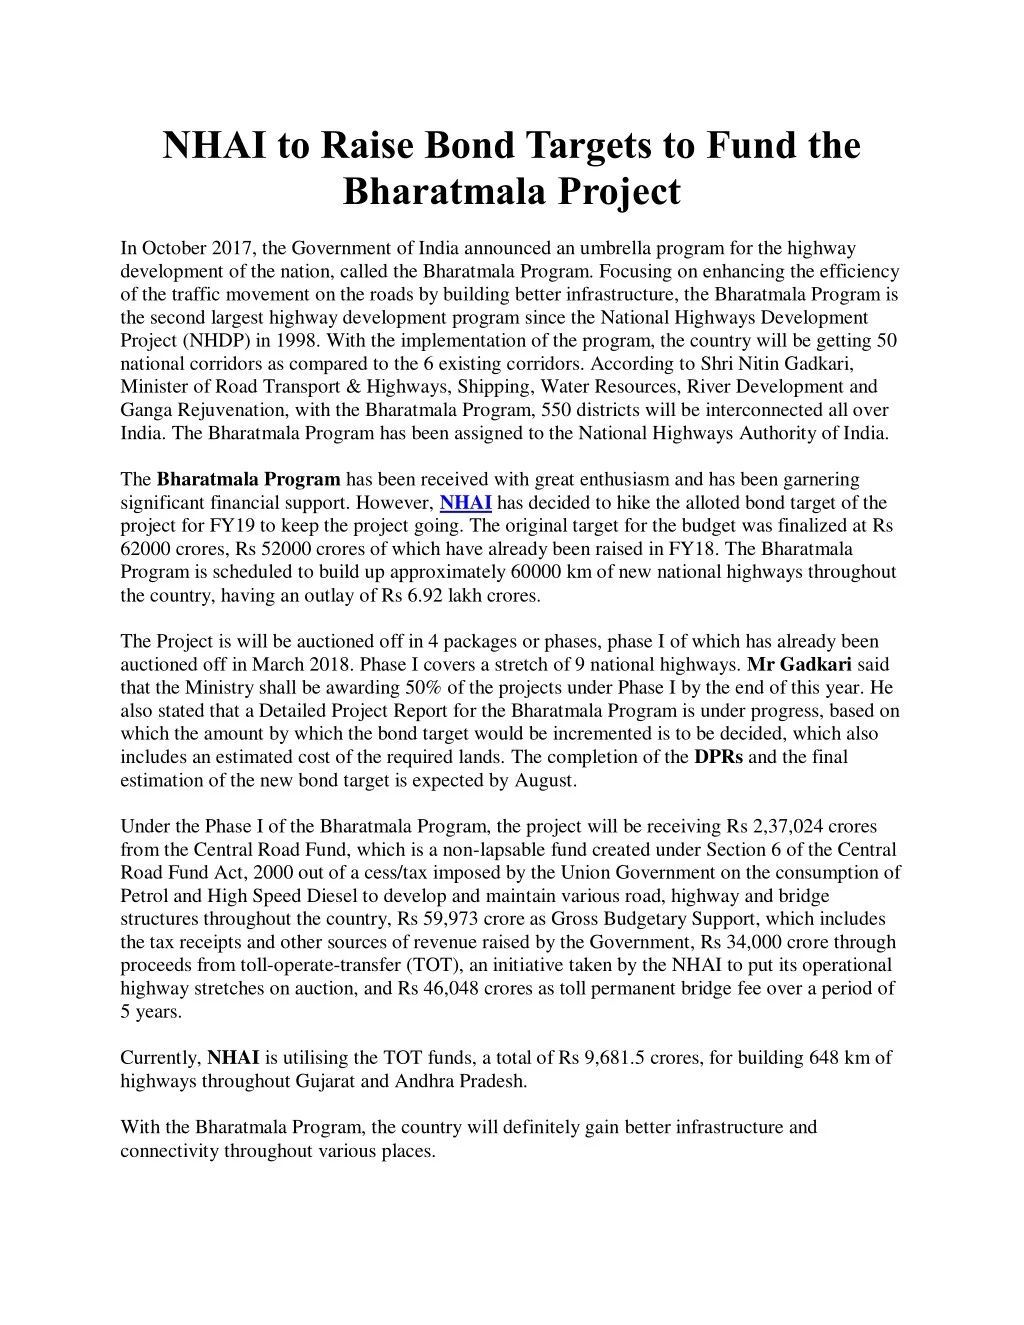 nhai to raise bond targets to fund the bharatmala